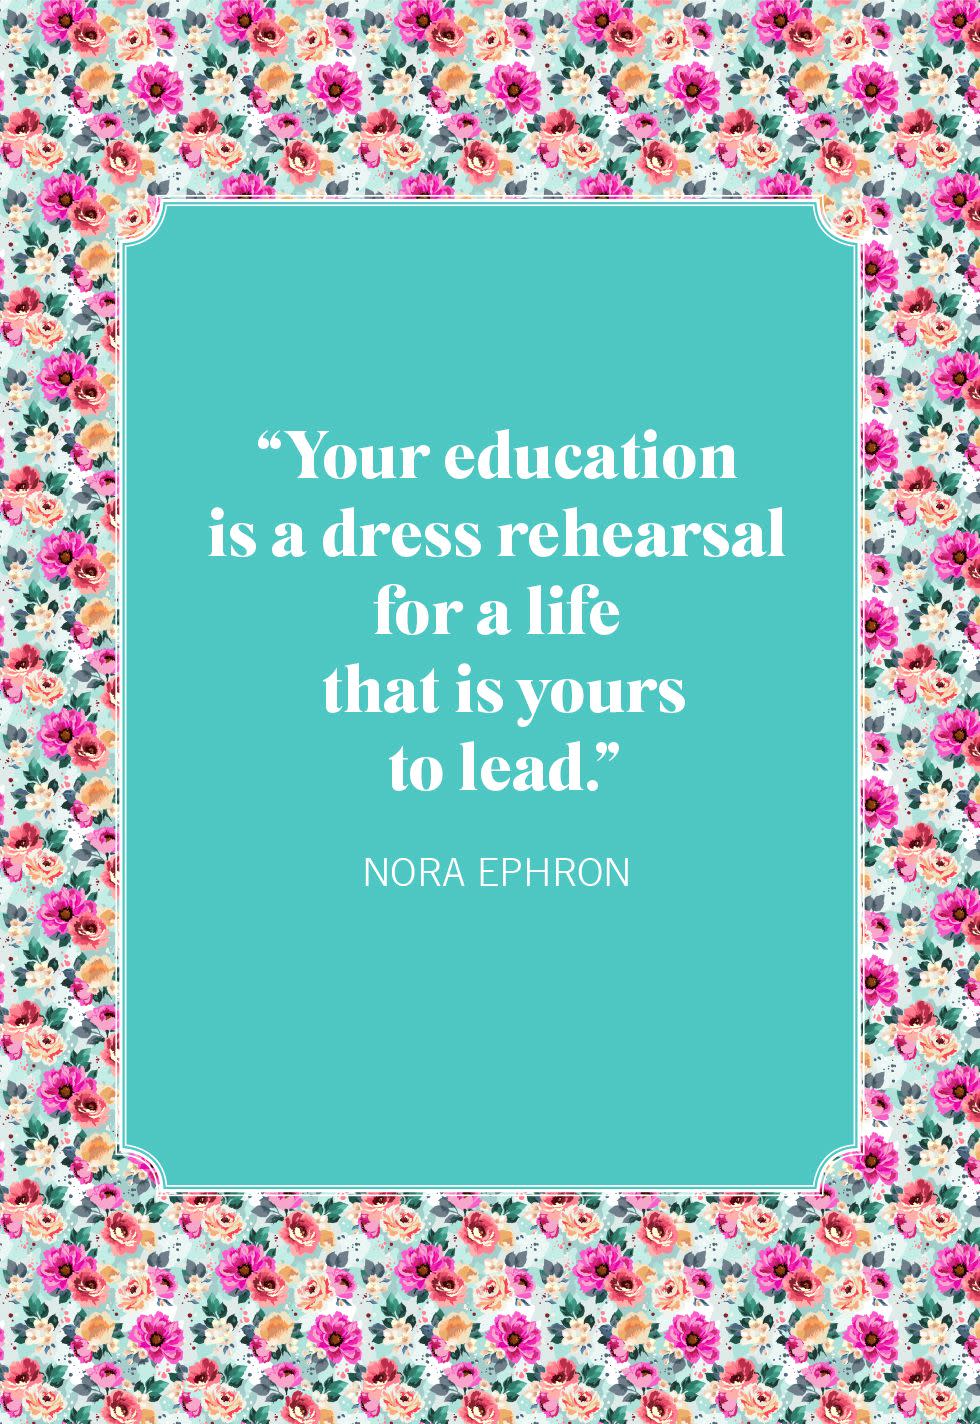 nora ephron graduation quotes for daughter